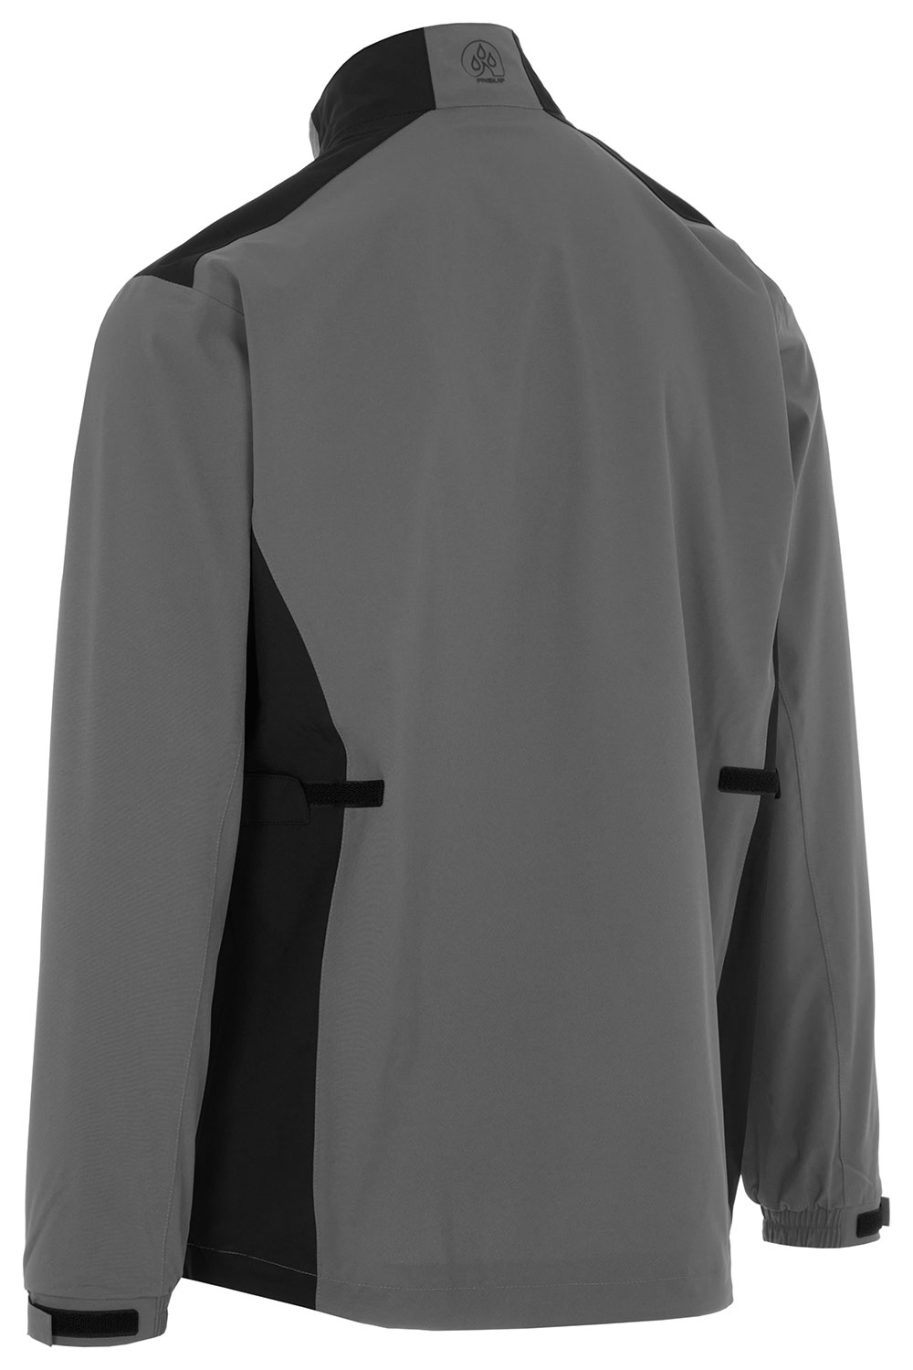 ProqQuip Aqualite Jacket - Grey/Black